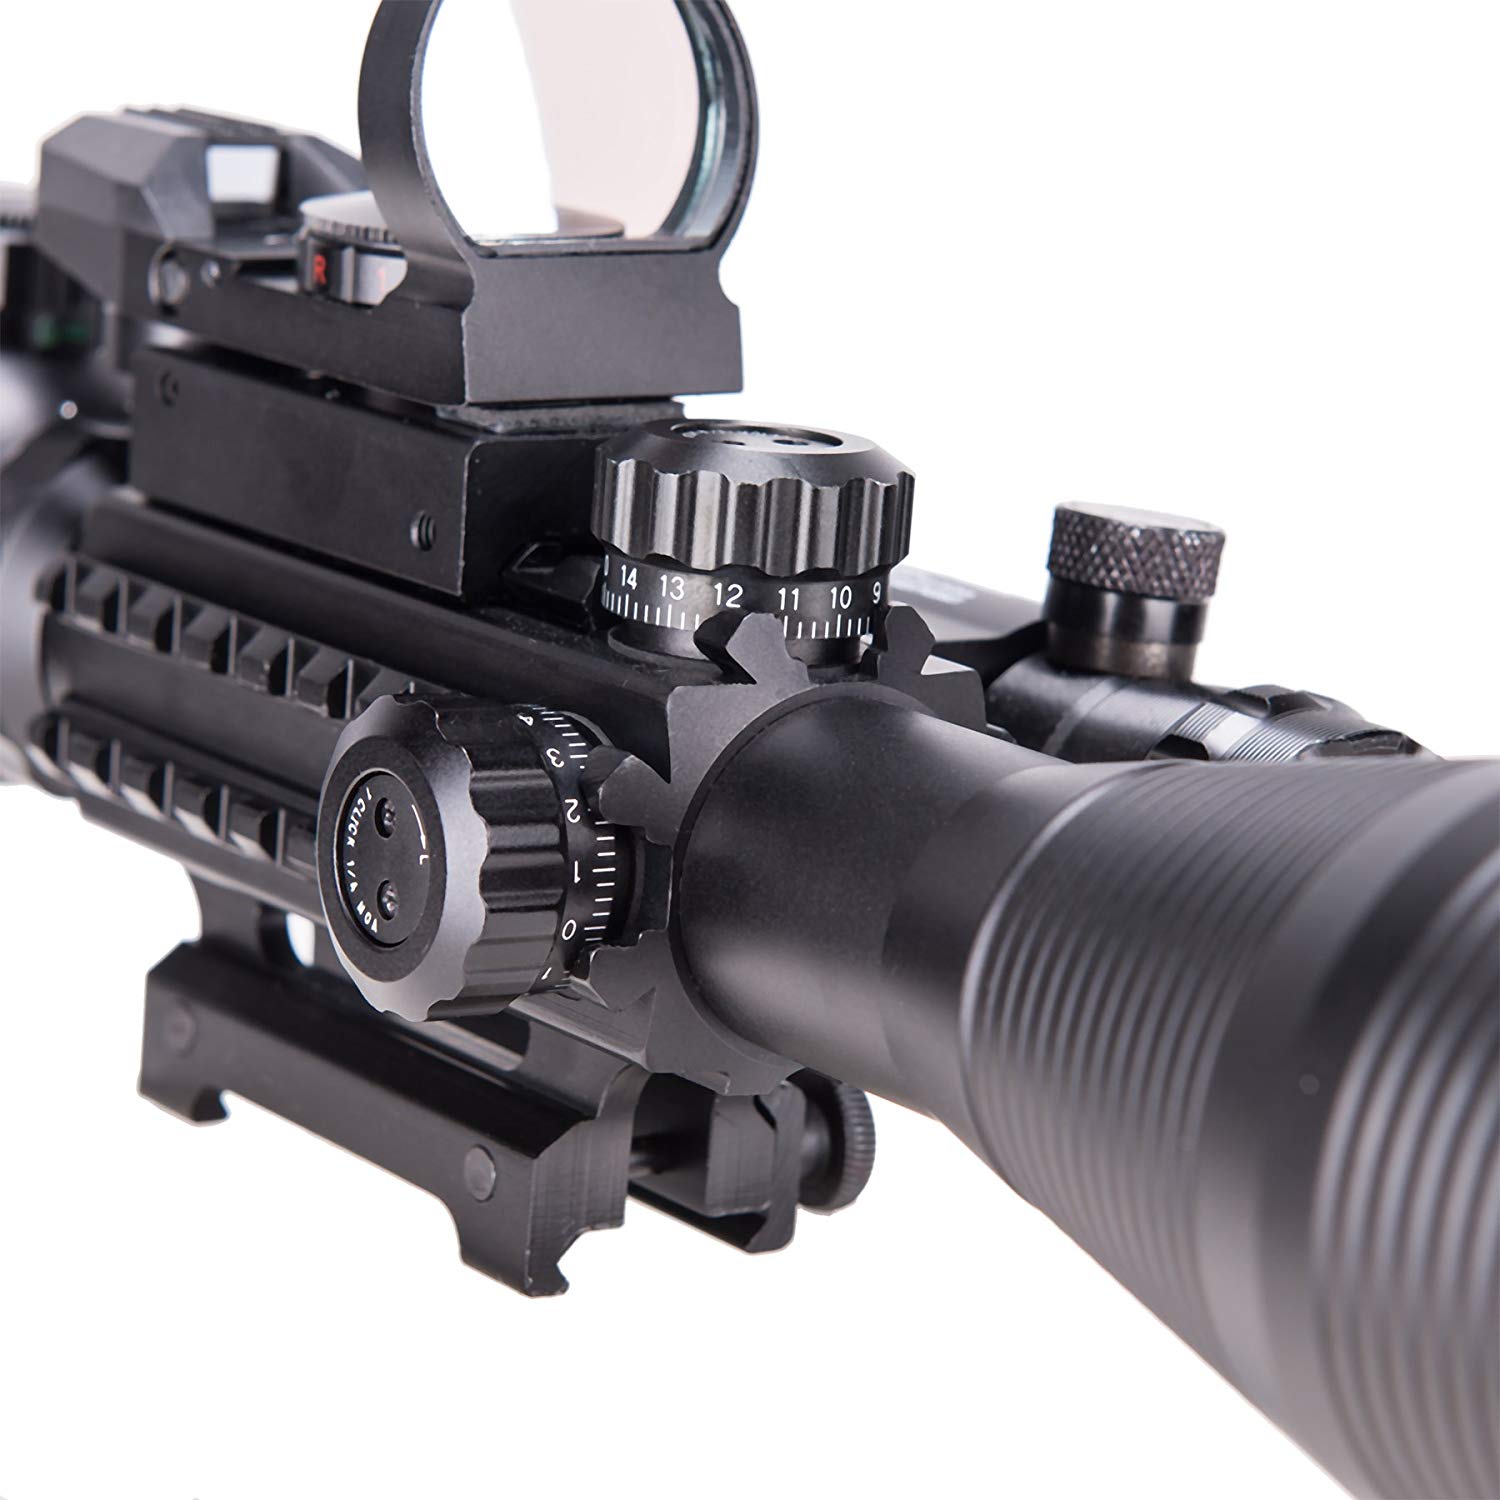 Pinty 3 in 1 Rifle Scope 4-12x50mm EG Rangefinder/Red&Green Reflex Sight/Green Dot Laser Sight